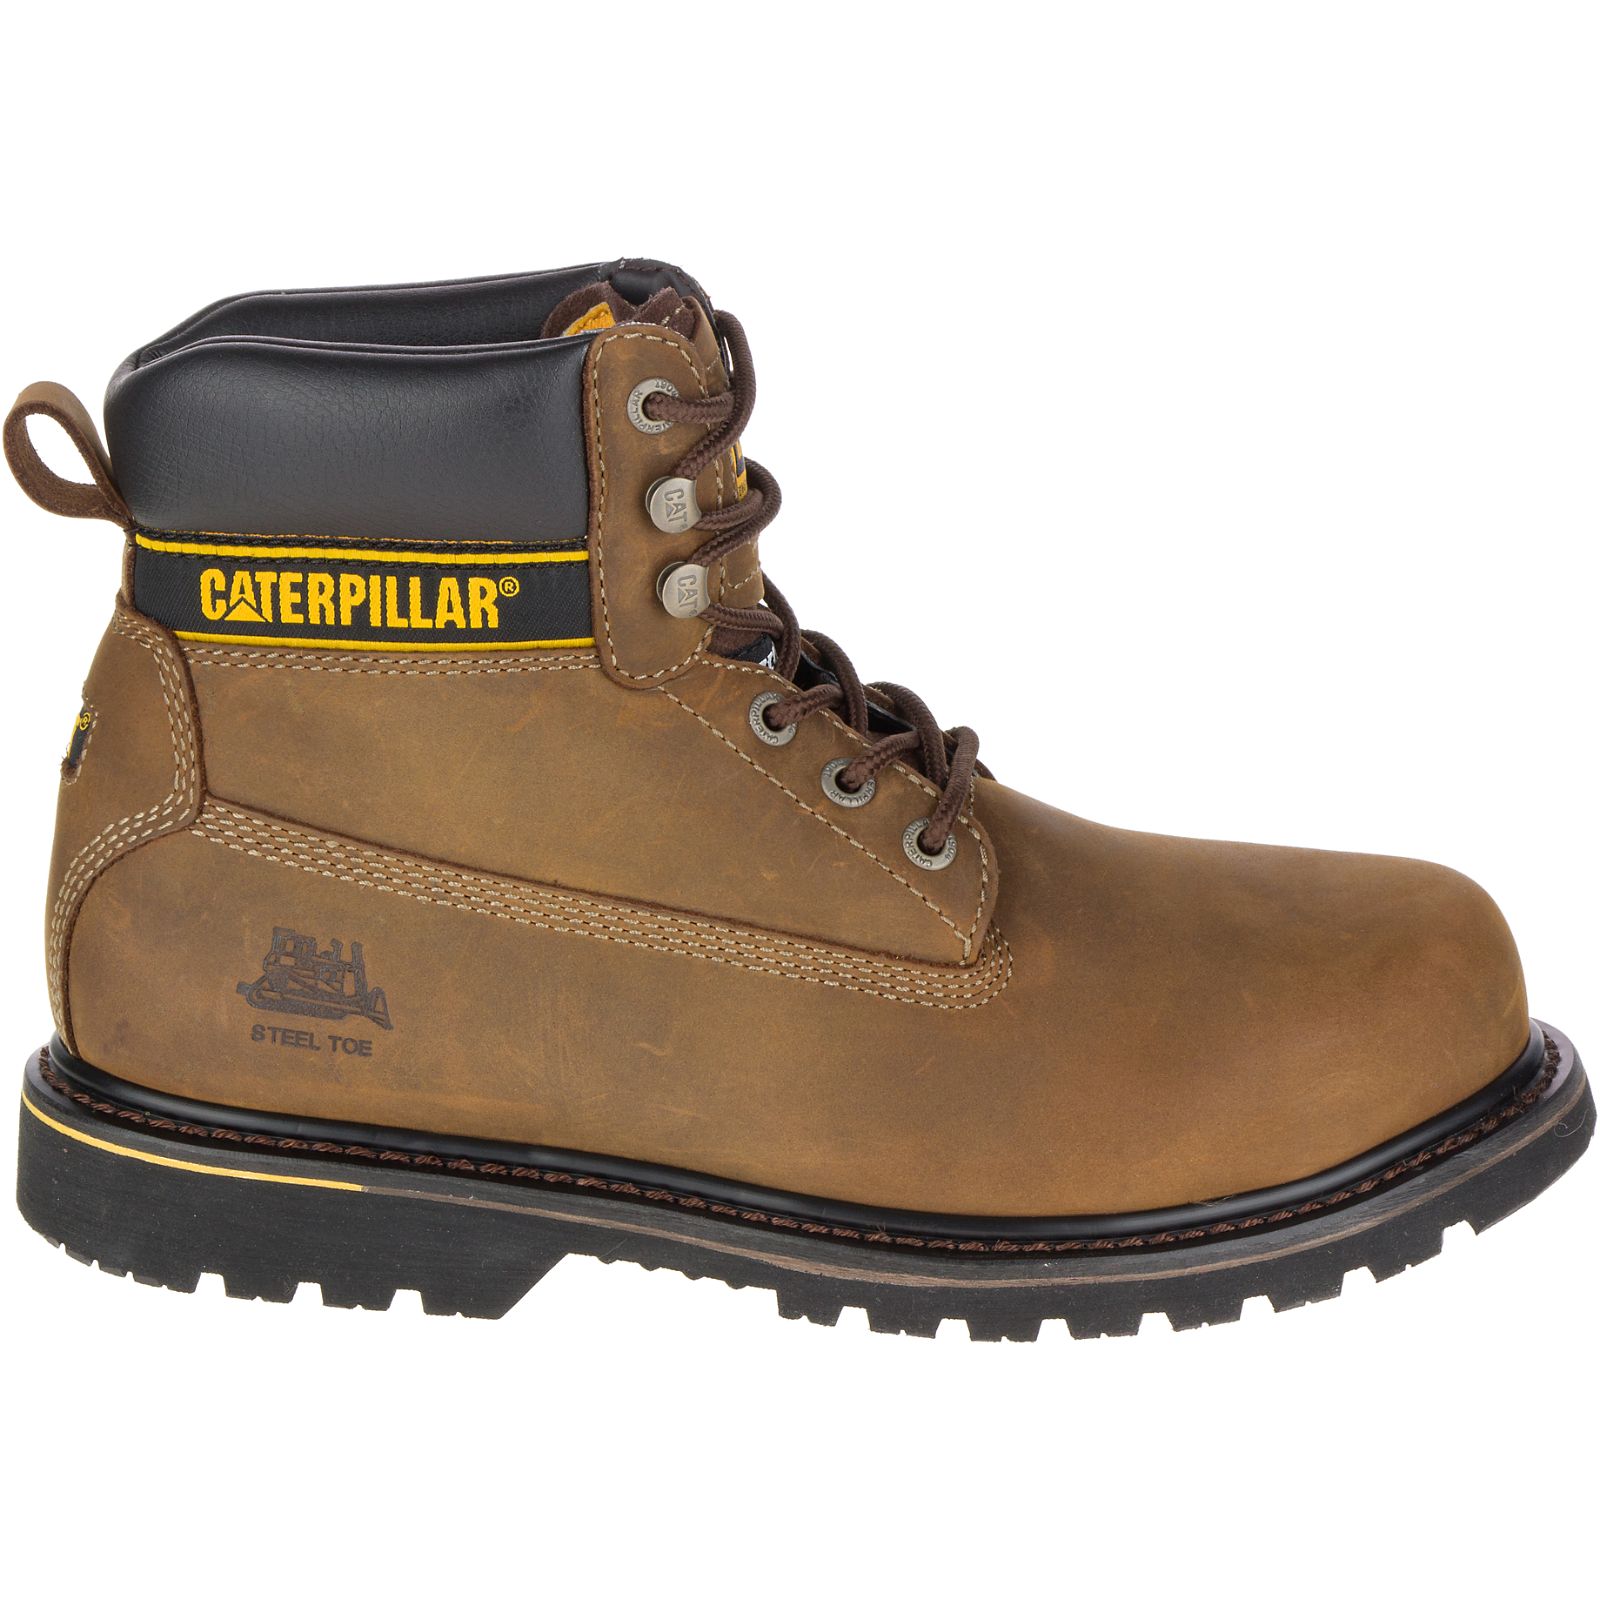 Men's Caterpillar Holton Steel Toe S3 Hro Src Work Boots Dark Brown | Cat-349205